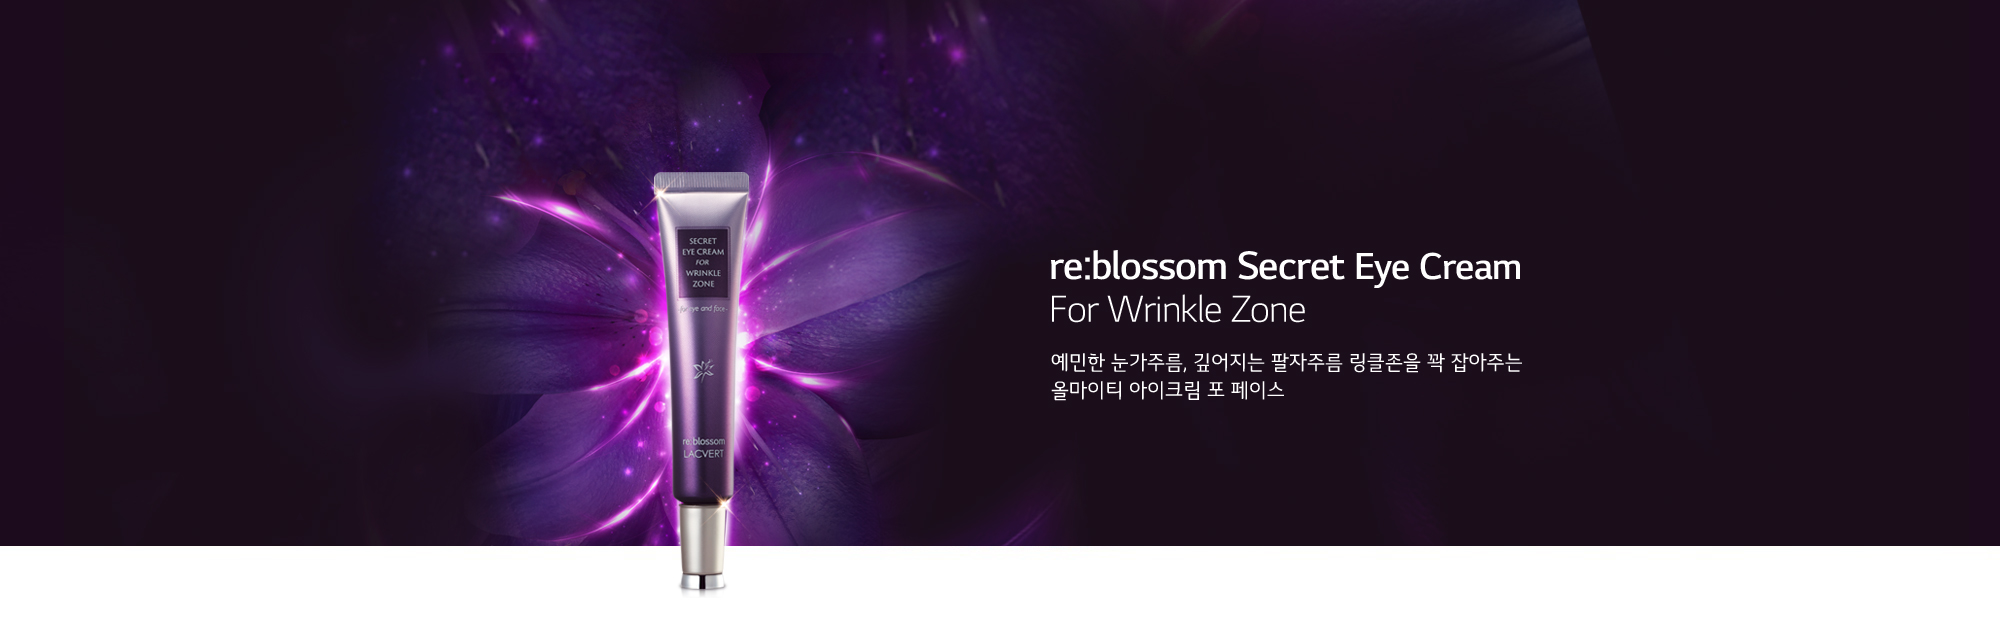 Re:blossom Secret Eye Cream For Wrinkle Zone  ָ,  ָ Ŭ  ִ øƼ ũ  ̽